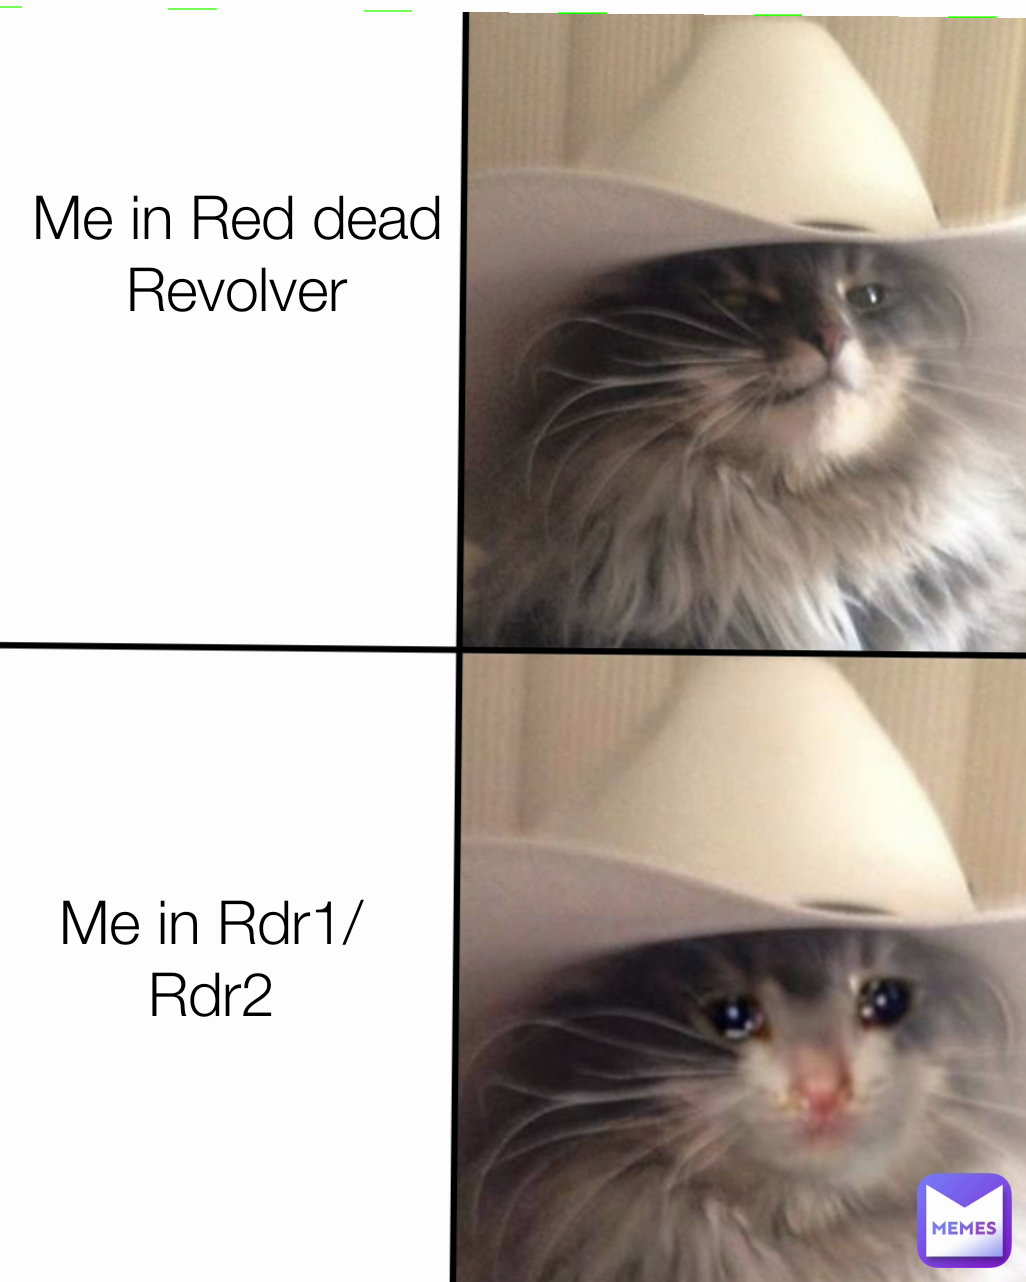 Me in Rdr1/Rdr2 Me in Red dead 
Revolver 